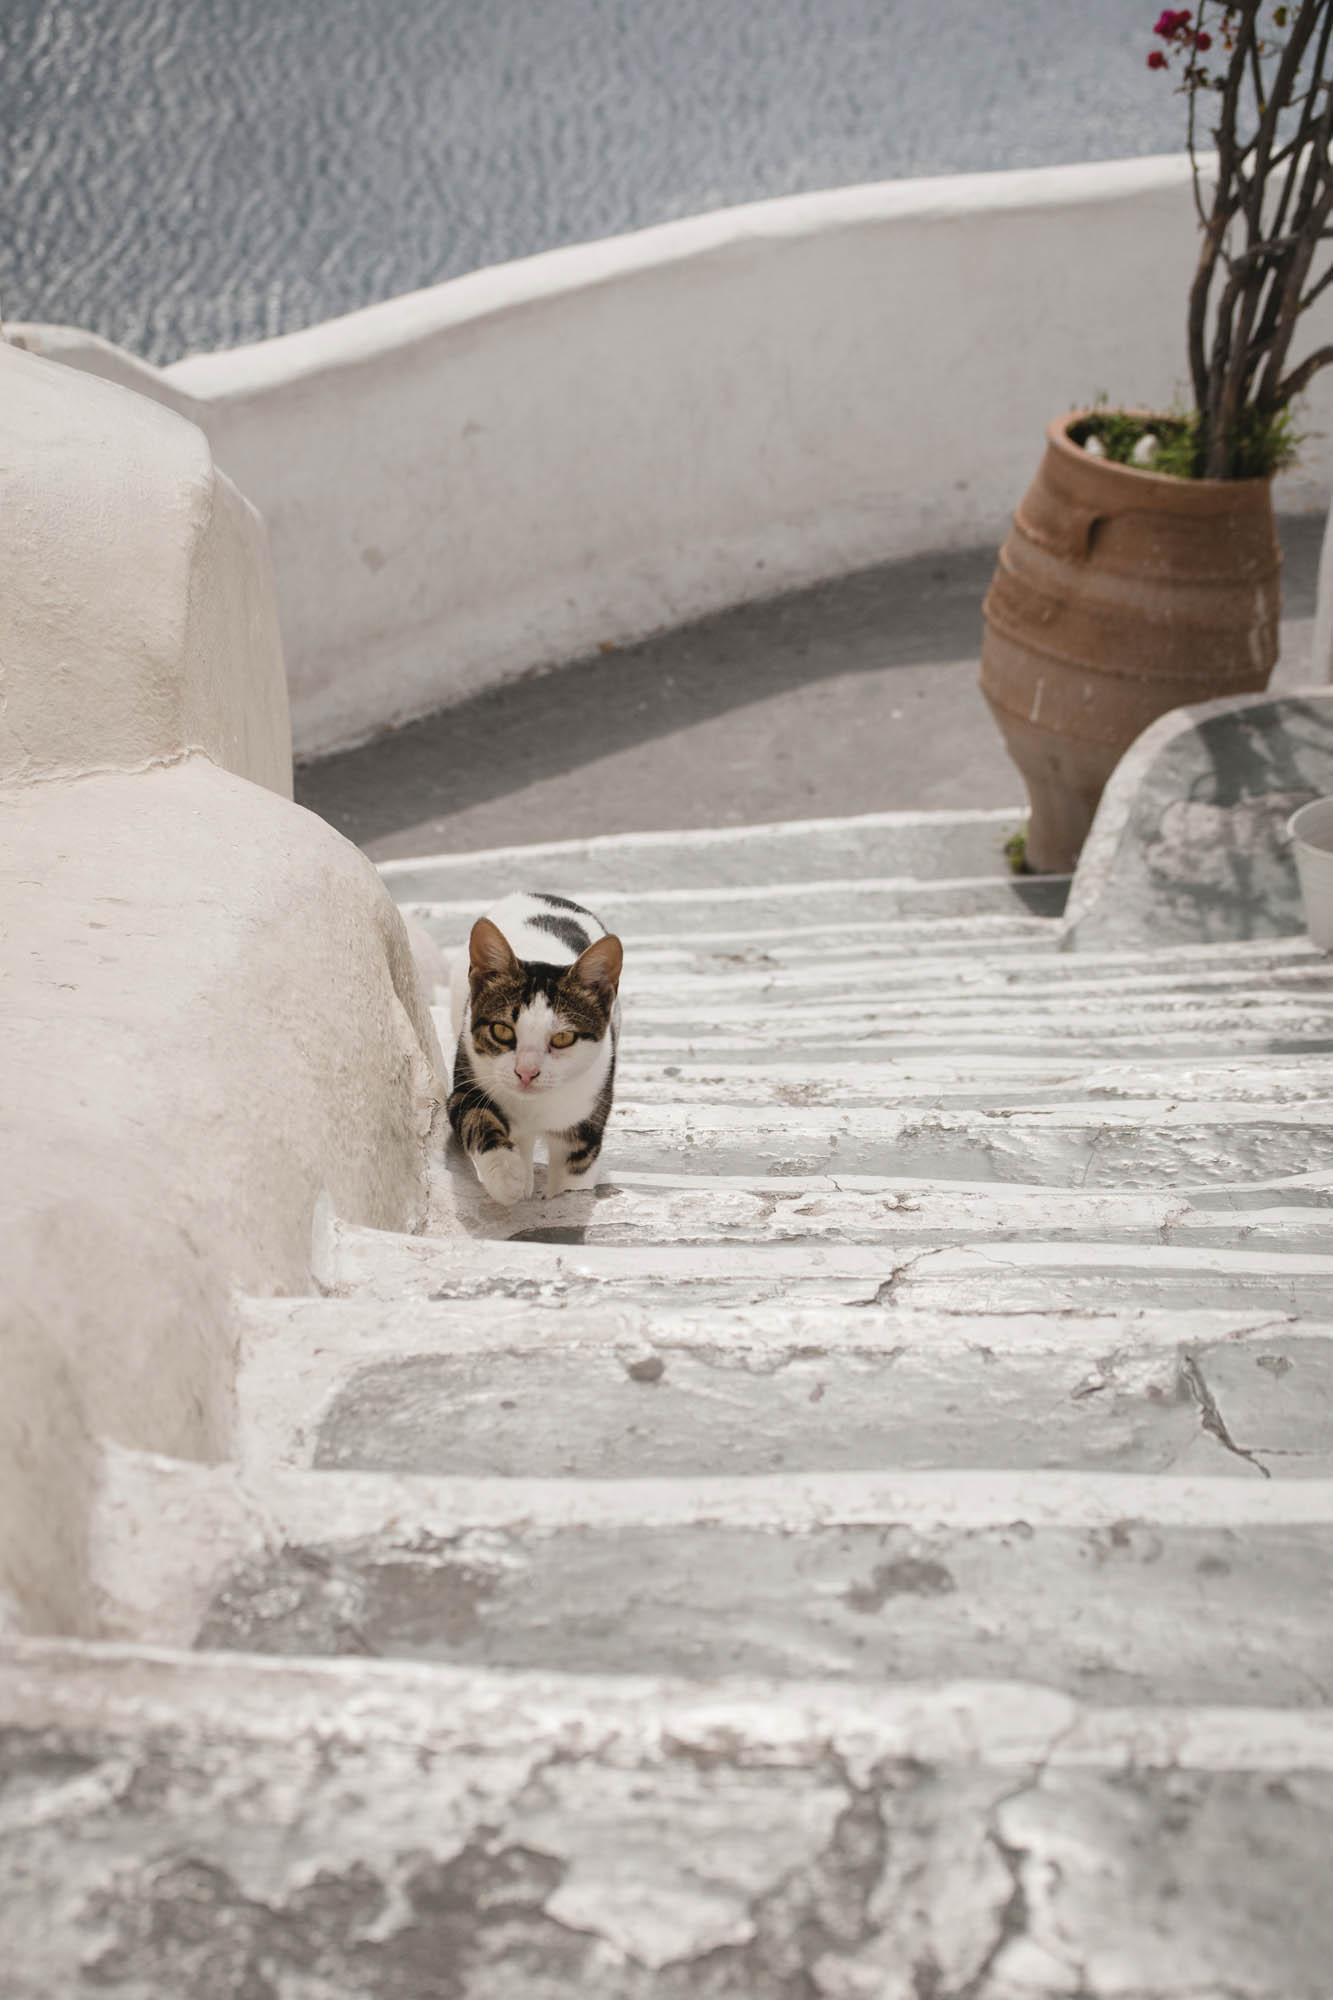 santorini, kot idący po schodach, detal